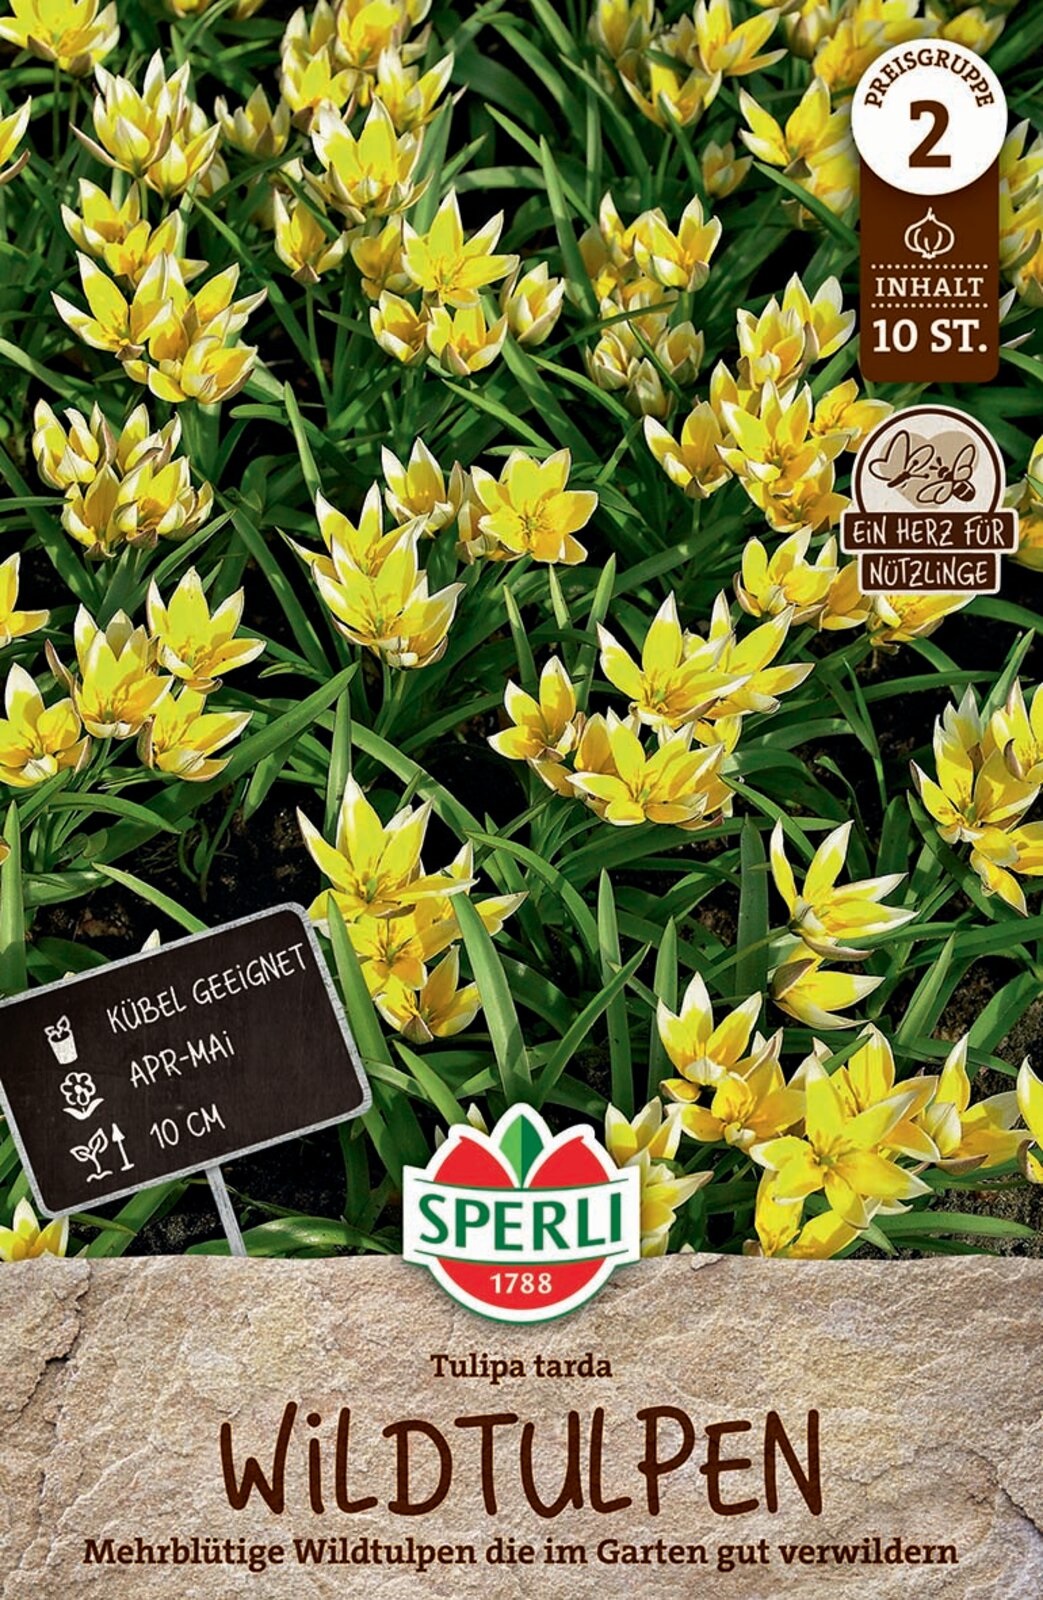 Virághagyma Tulipán vadtulipán Tulipa tarda 10 db Sperli